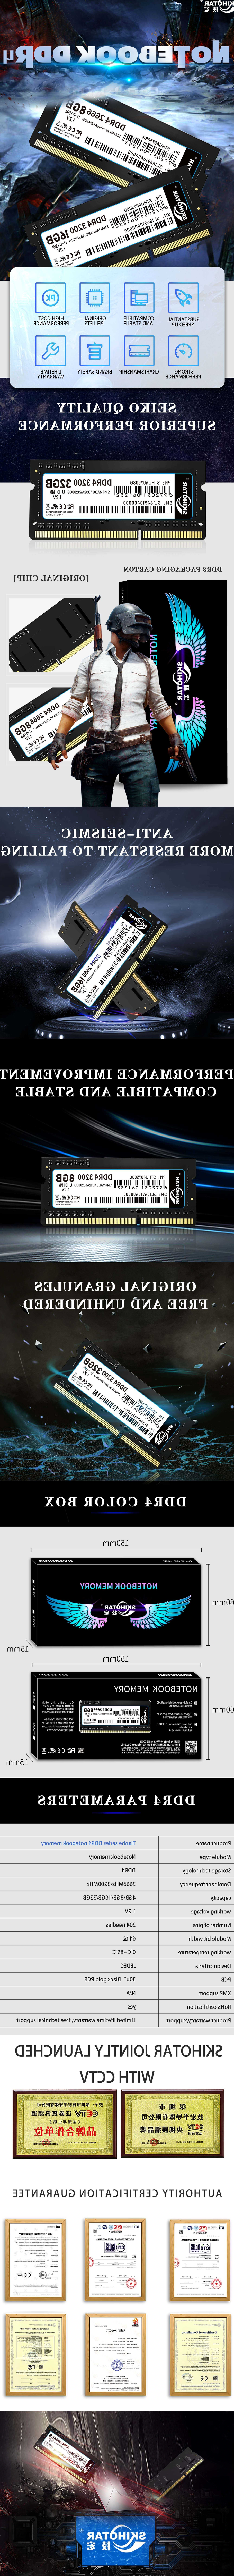 Tanie SHIHOTAR Sodimm Ram DDR4 4GB 8GB 16GB 32GB 2133MHz 2400MHz 2… sklep internetowy